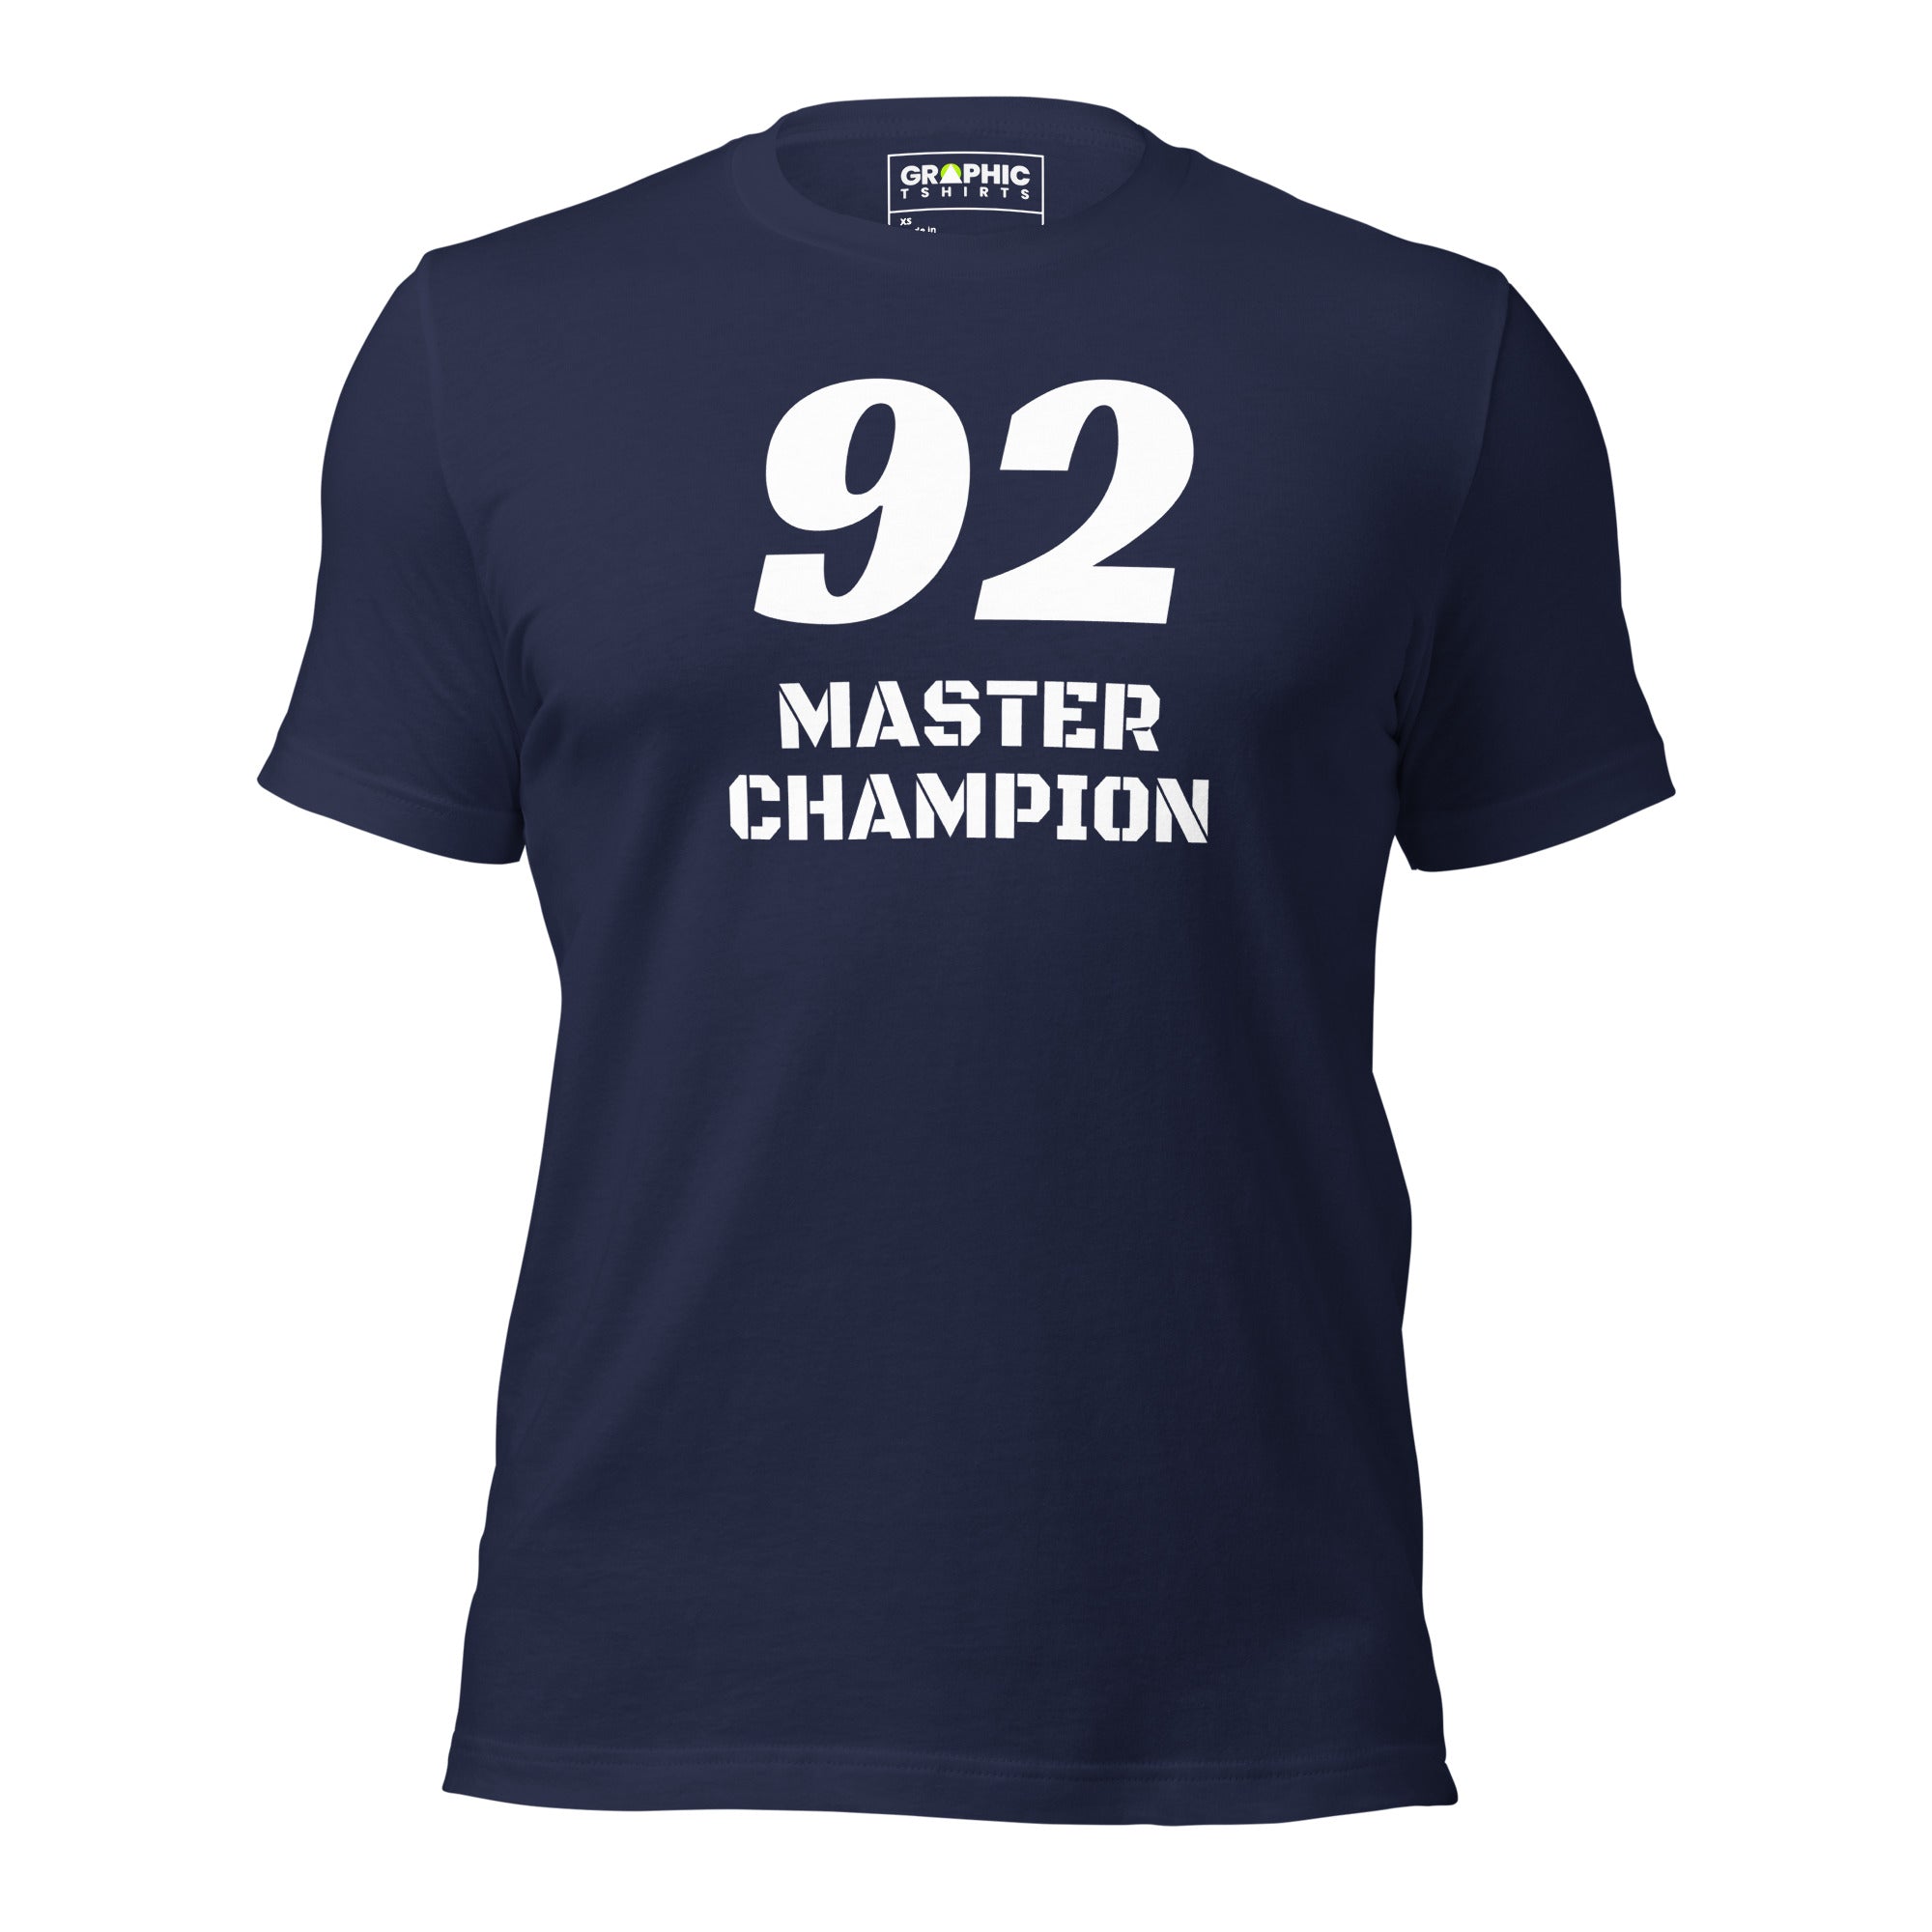 Unisex Crew Neck T-Shirt - 92 Master Champion